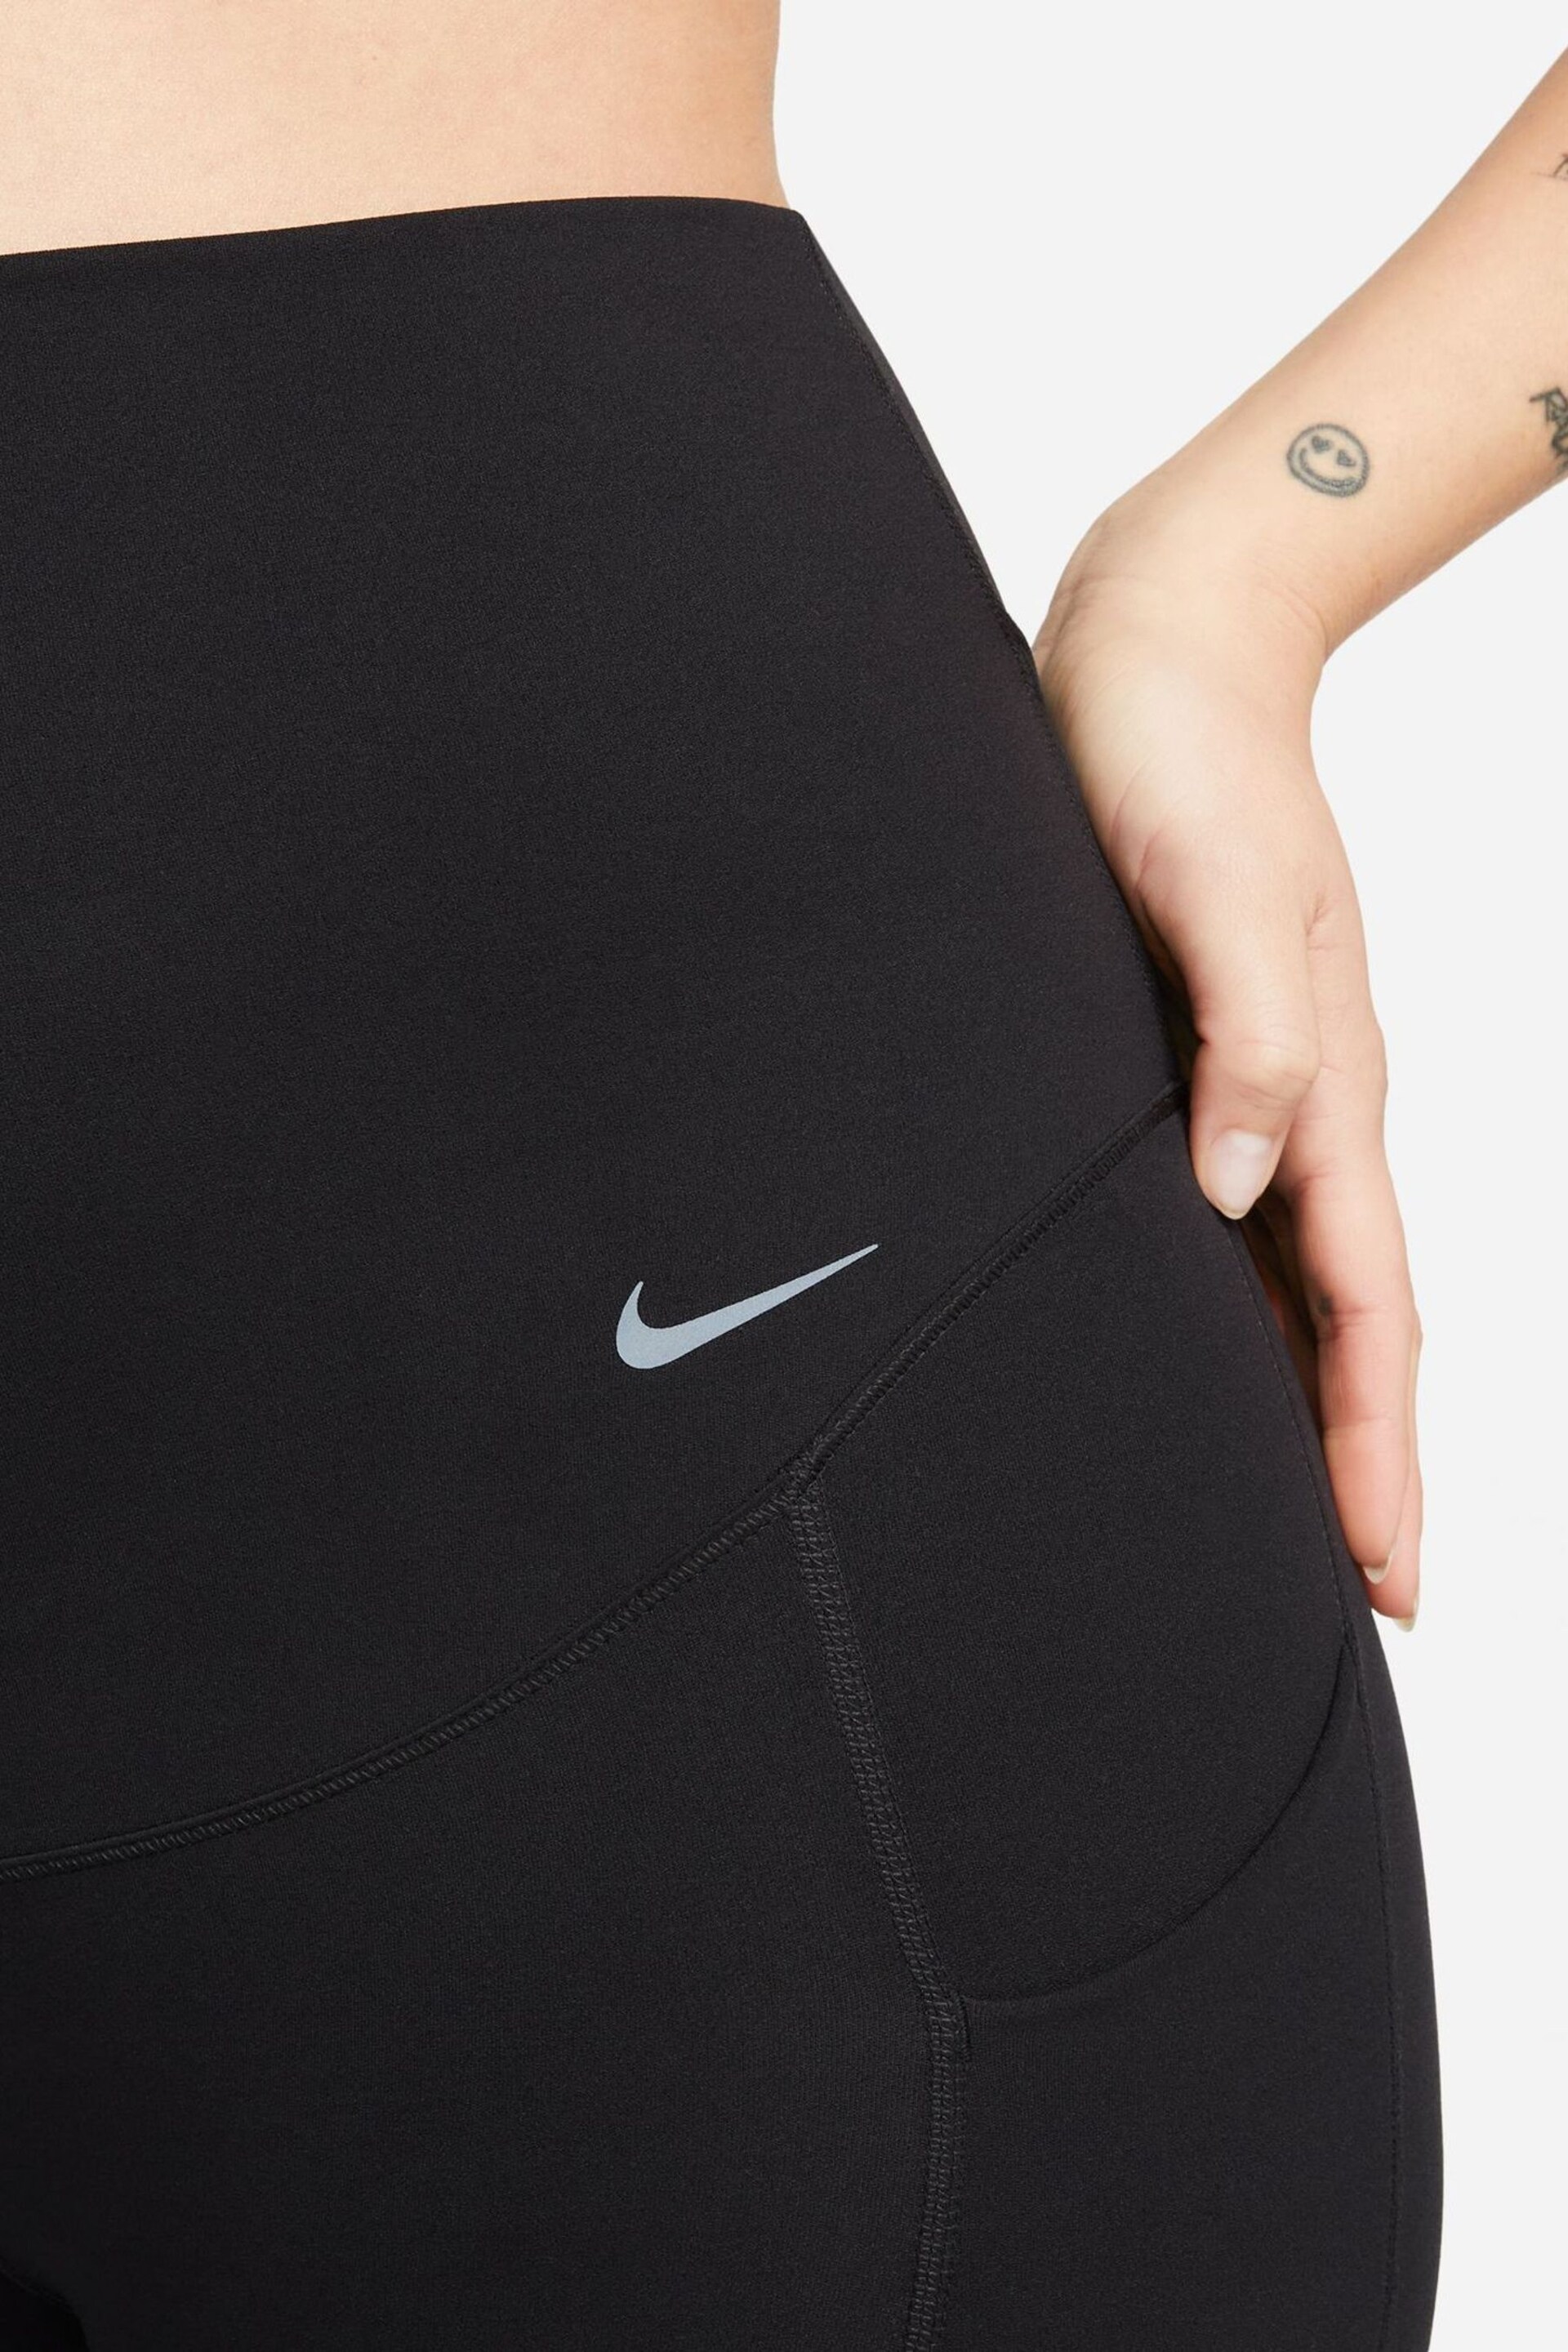 Nike Black Maternity Zenvy High Waisted 7/8 Leggings with Pockets - Image 5 of 9